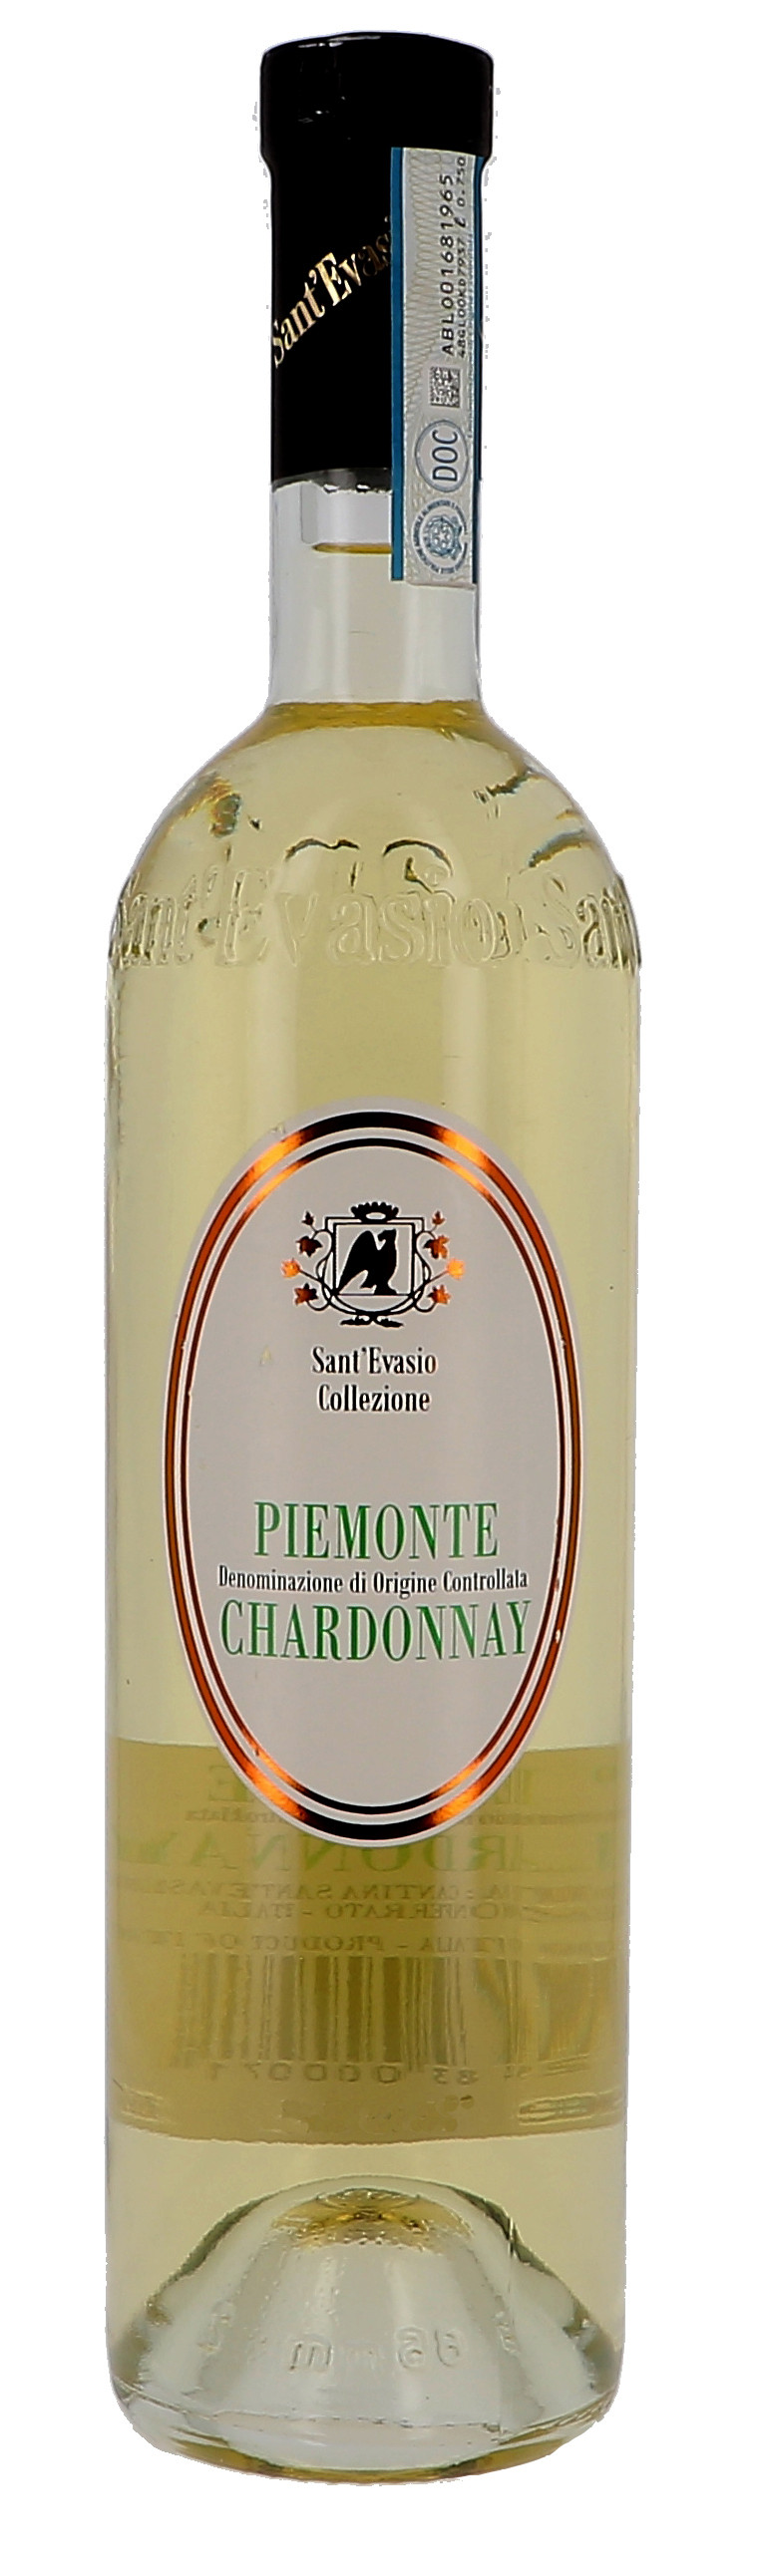 Chardonnay Piemonte 75cl Cantina Sant'Evasio - Italie